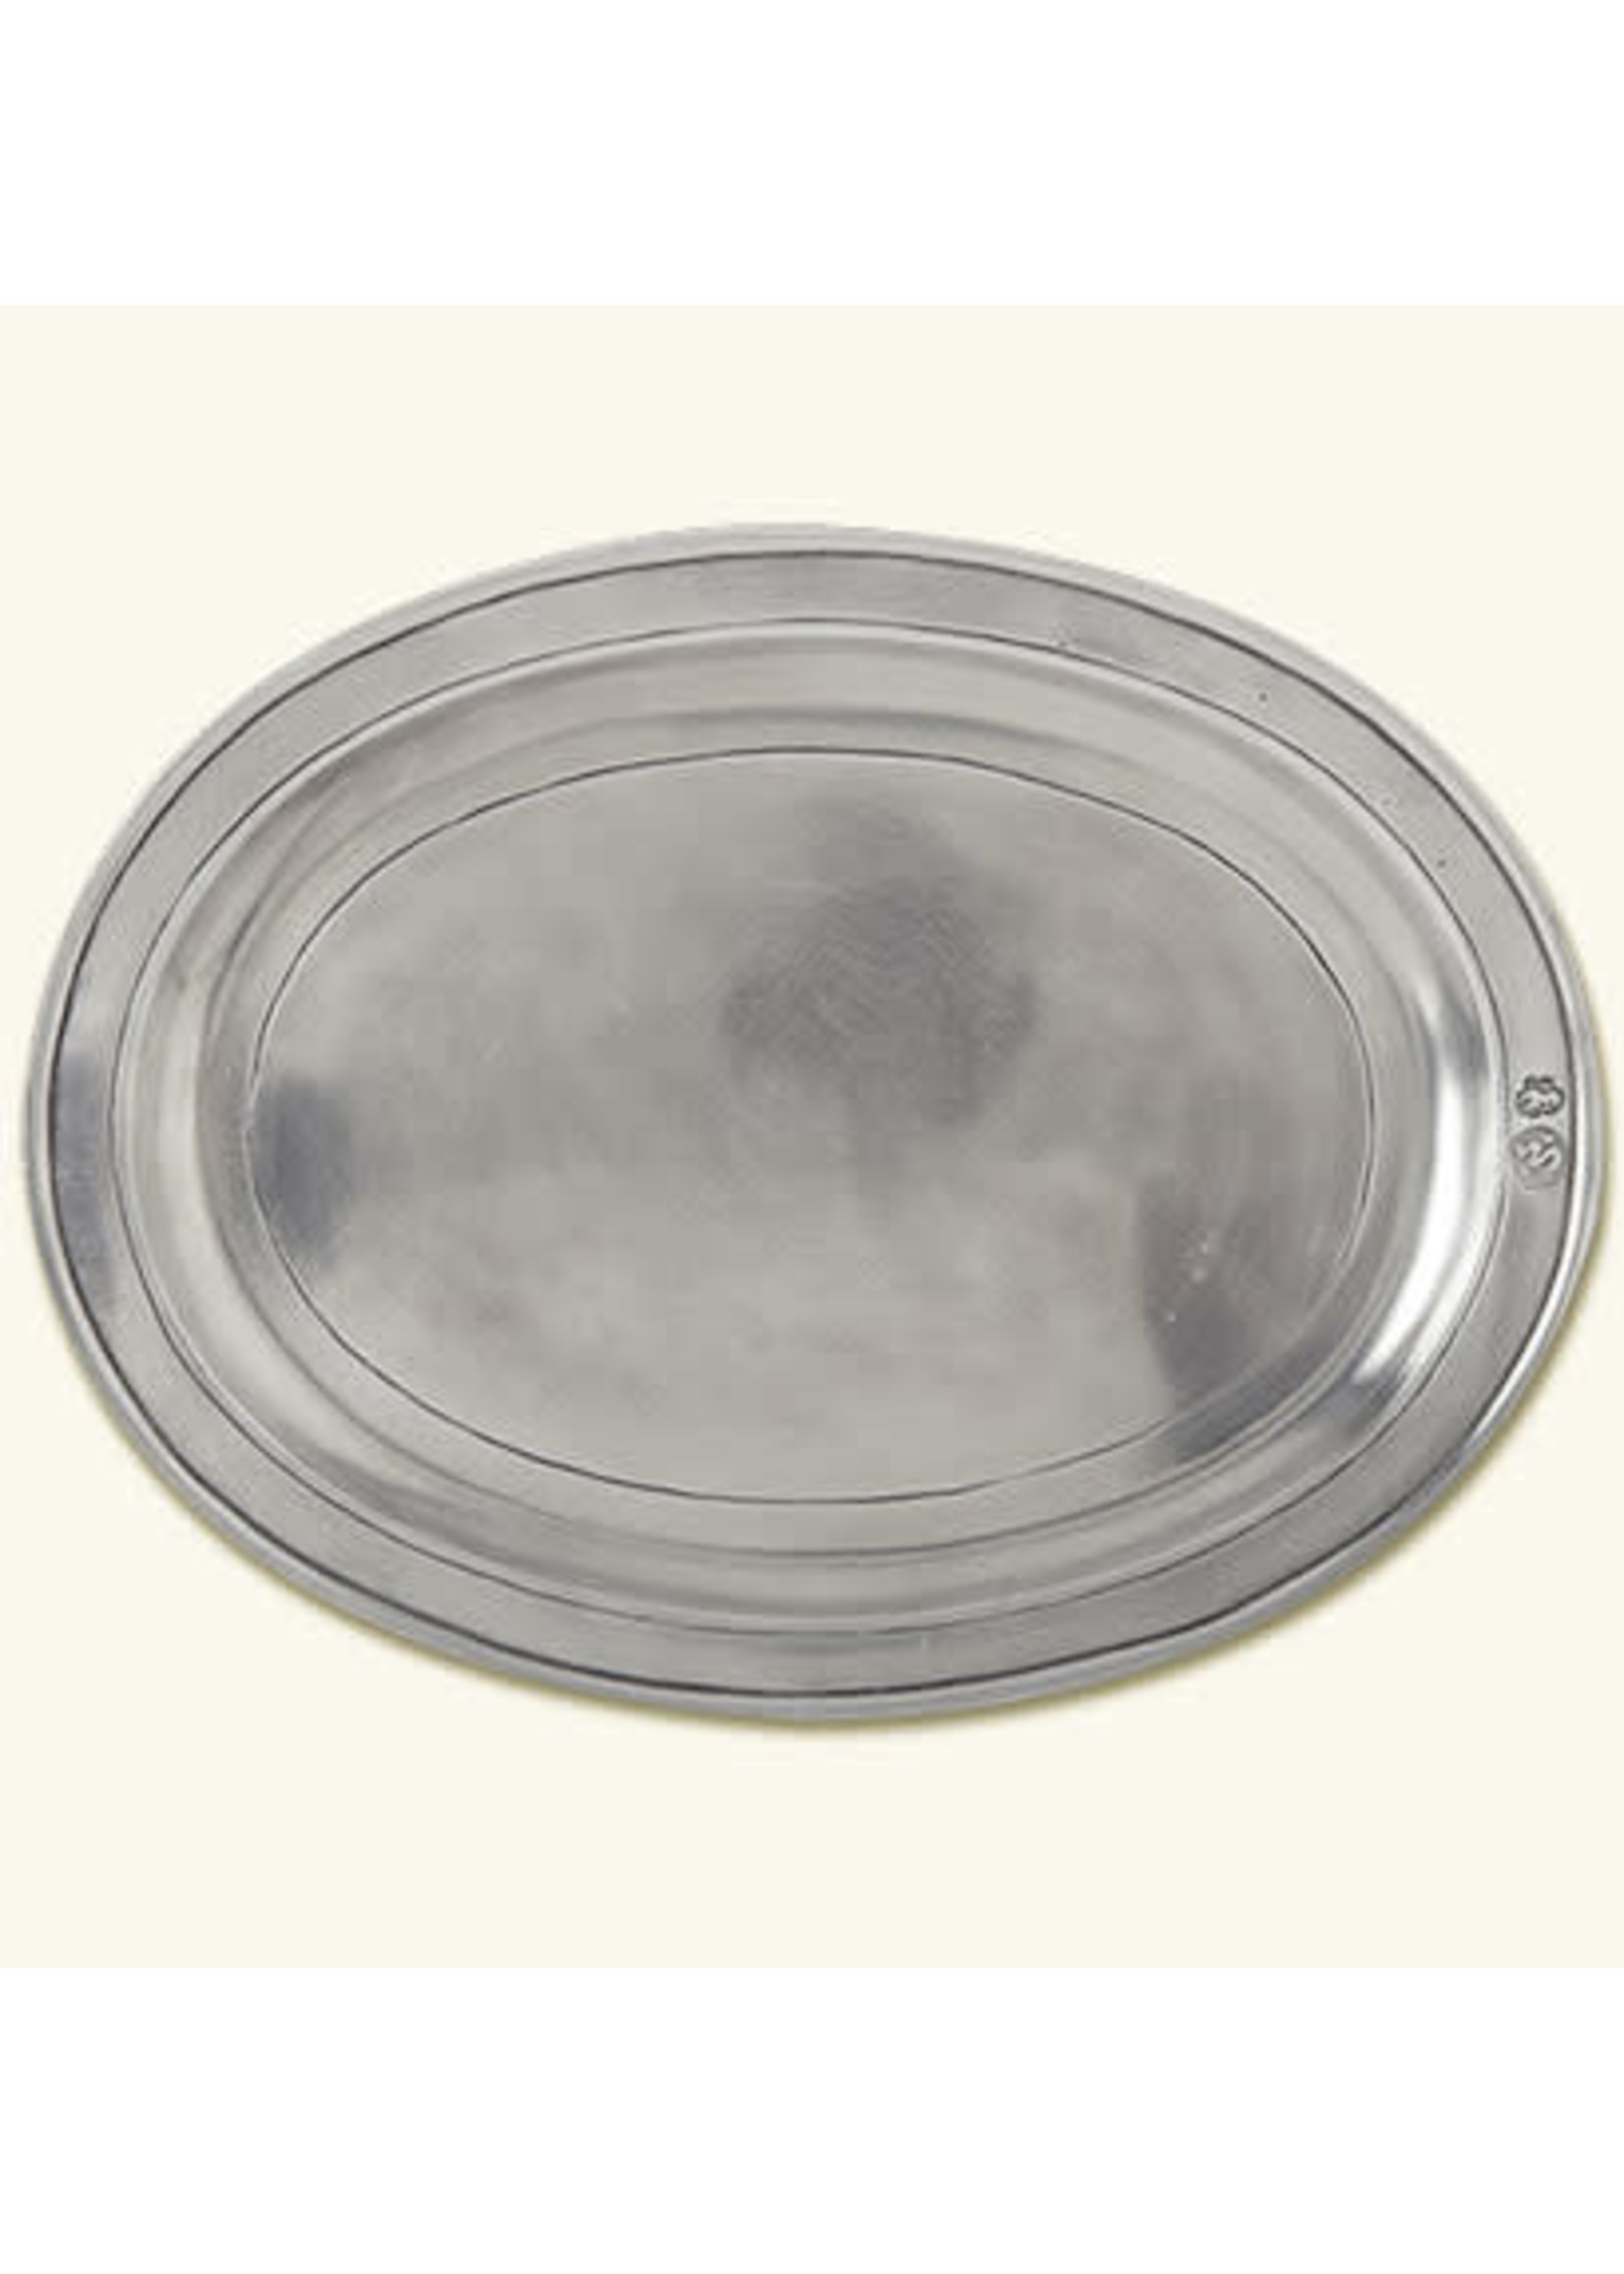 Oval Incised Tray Small/Medium